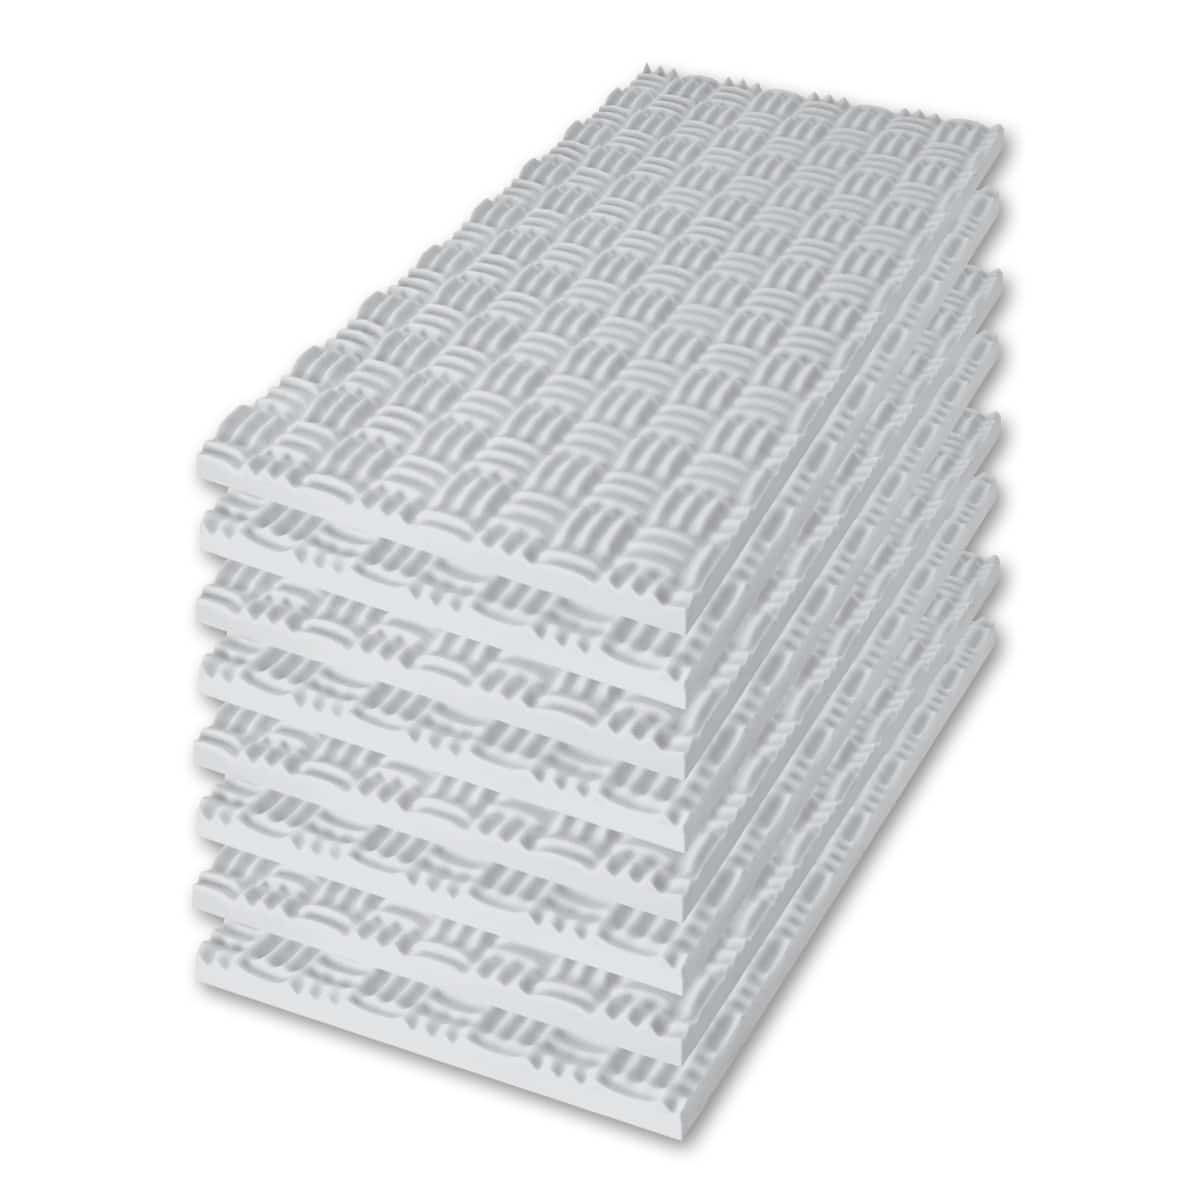 SONEX® Classic Foam - Acoustical Solutions